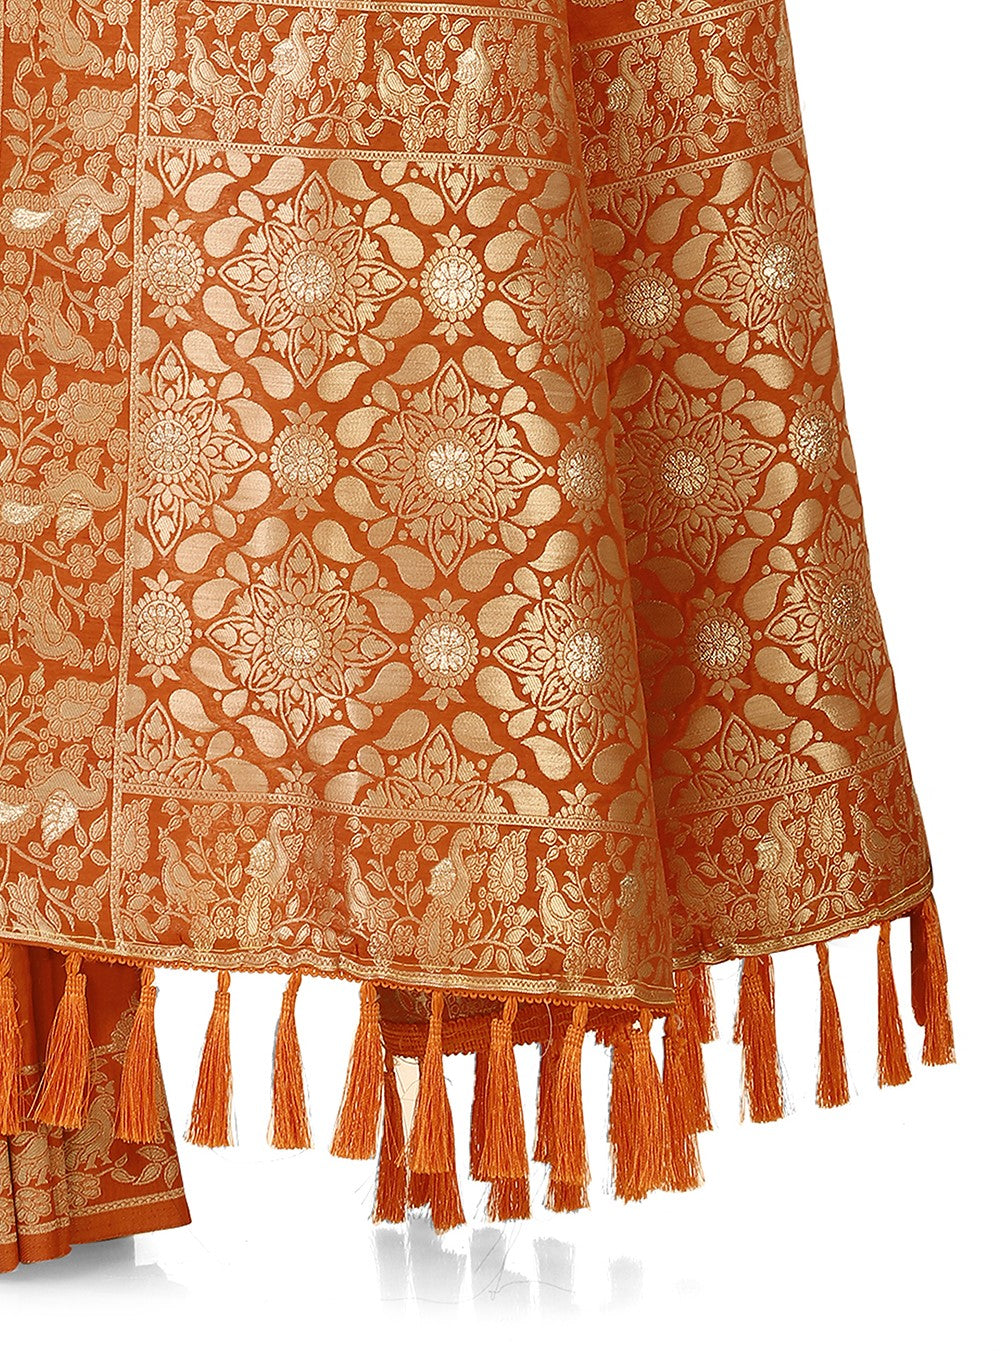 Orange Color banarasi silk saree for wedding